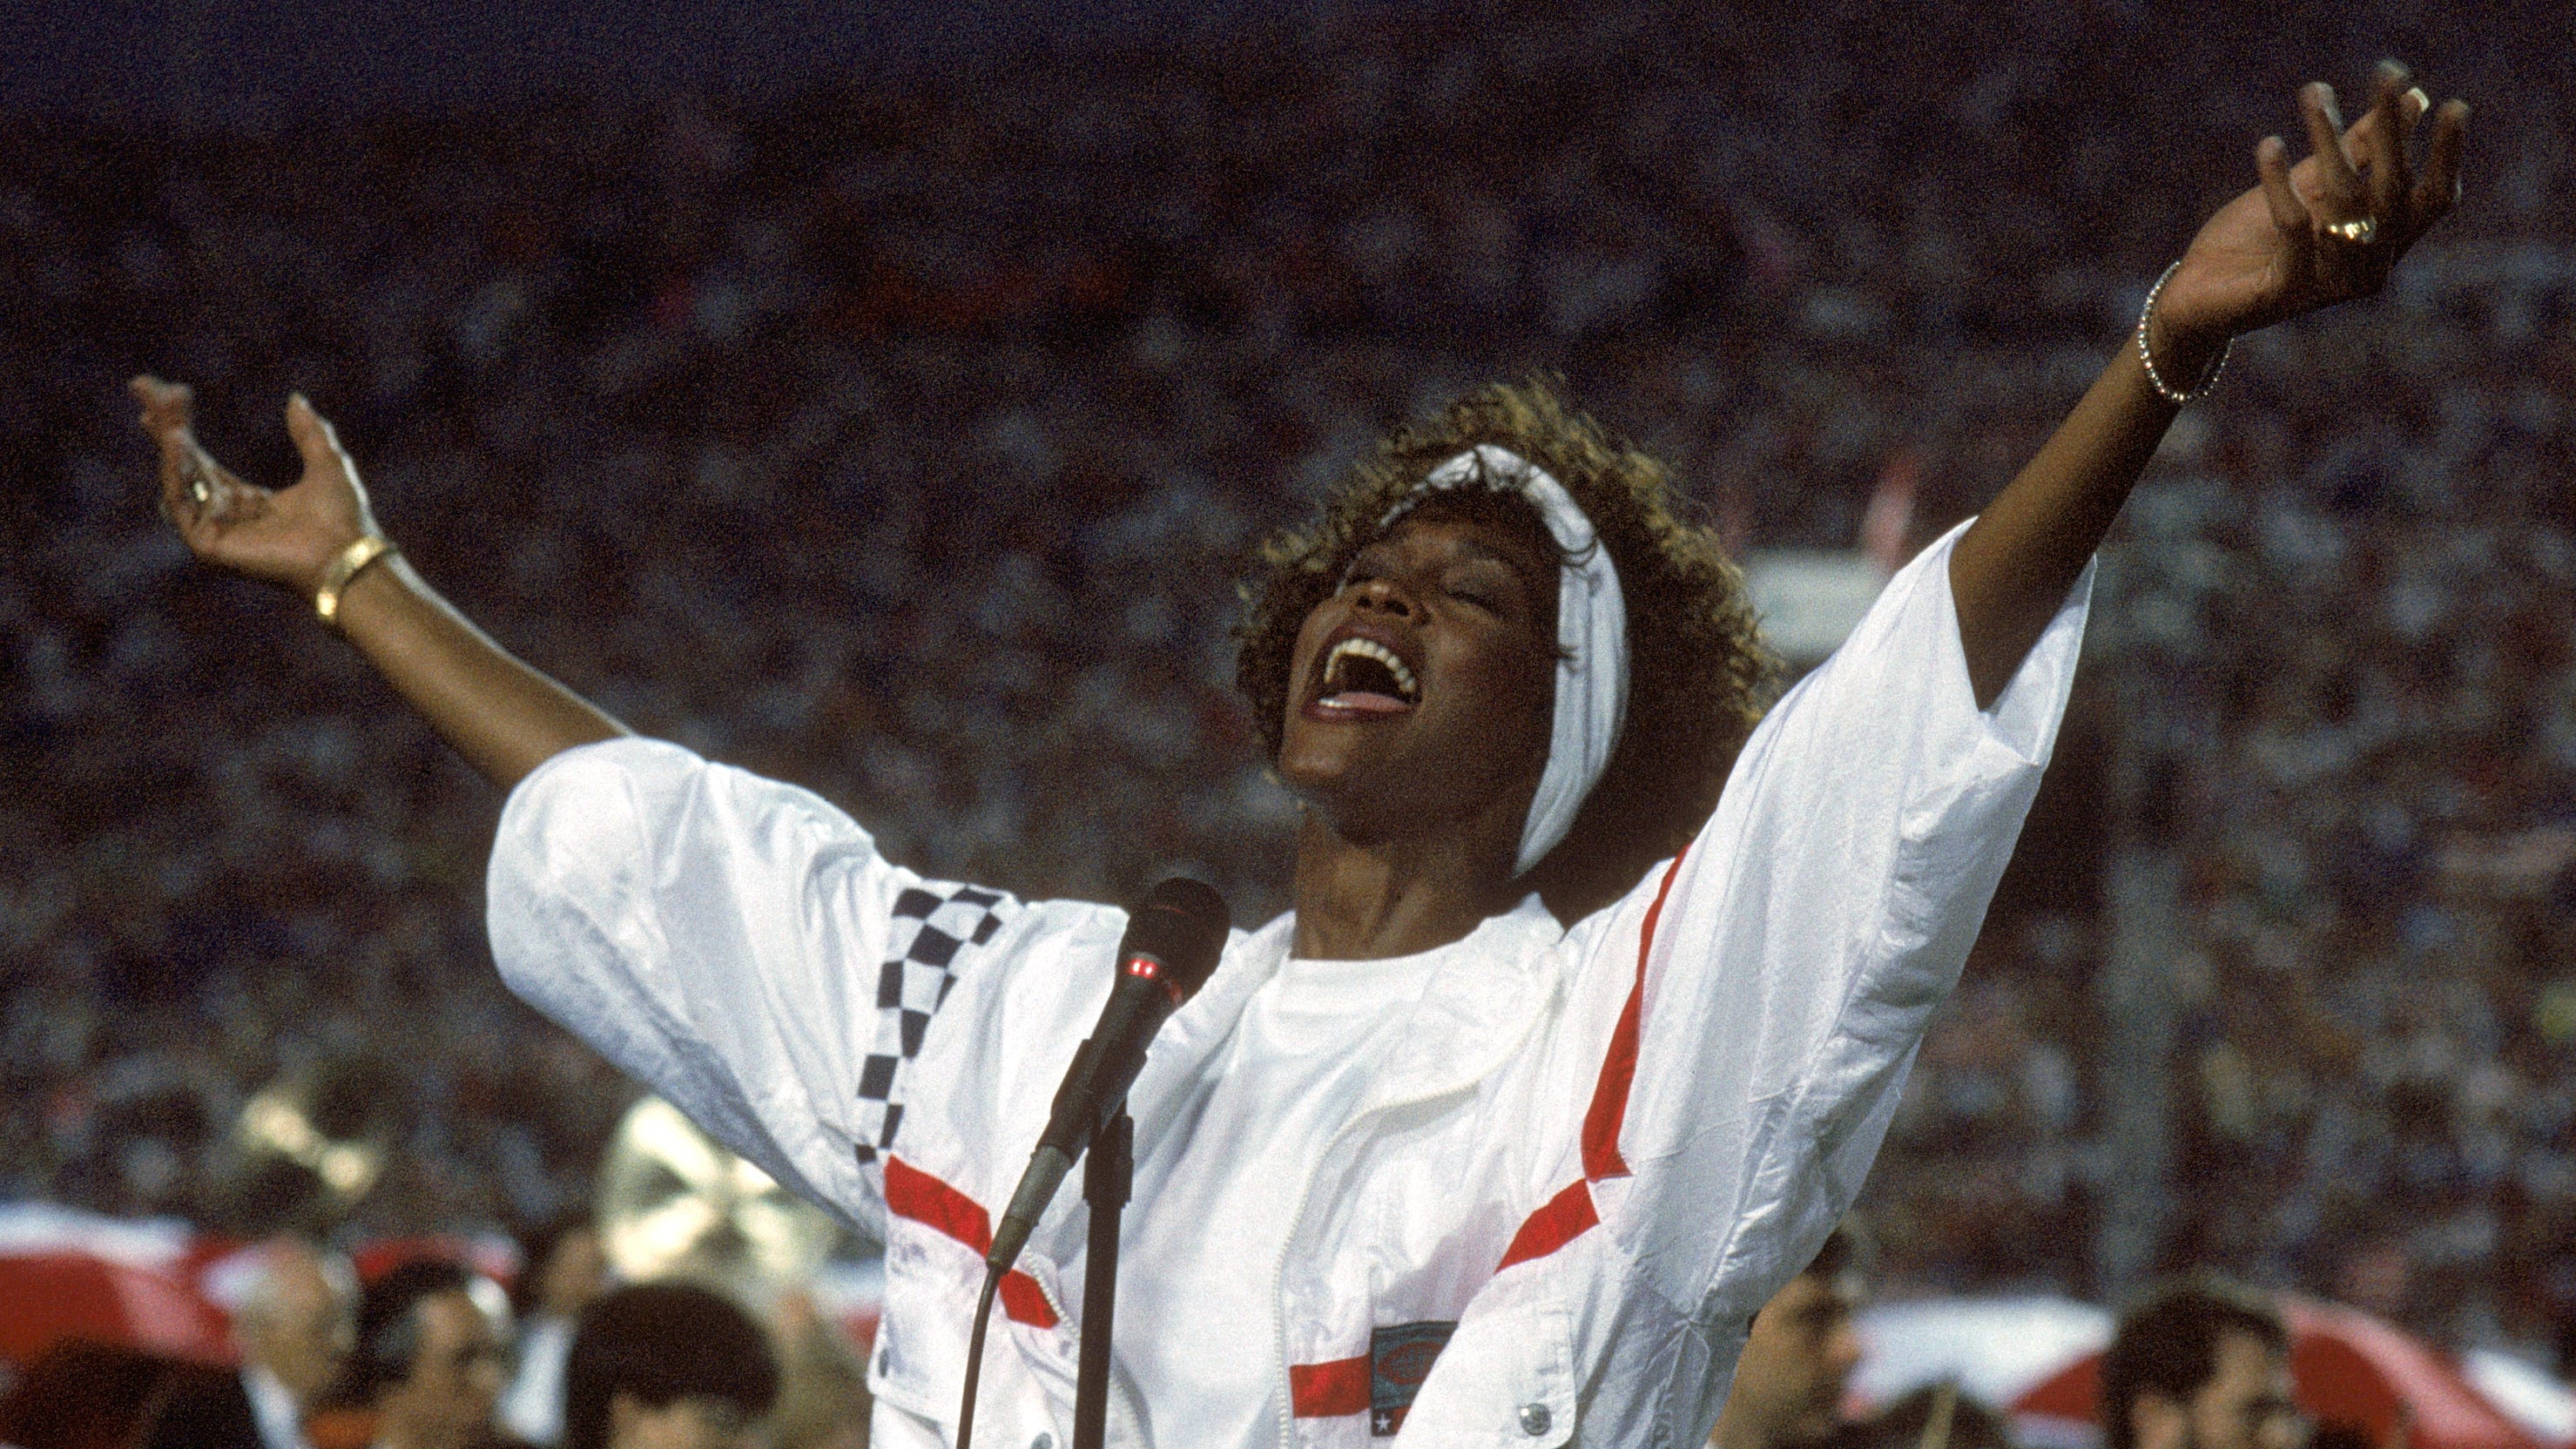 Whitney Houston's national anthem at Super Bowl 25 remains iconic